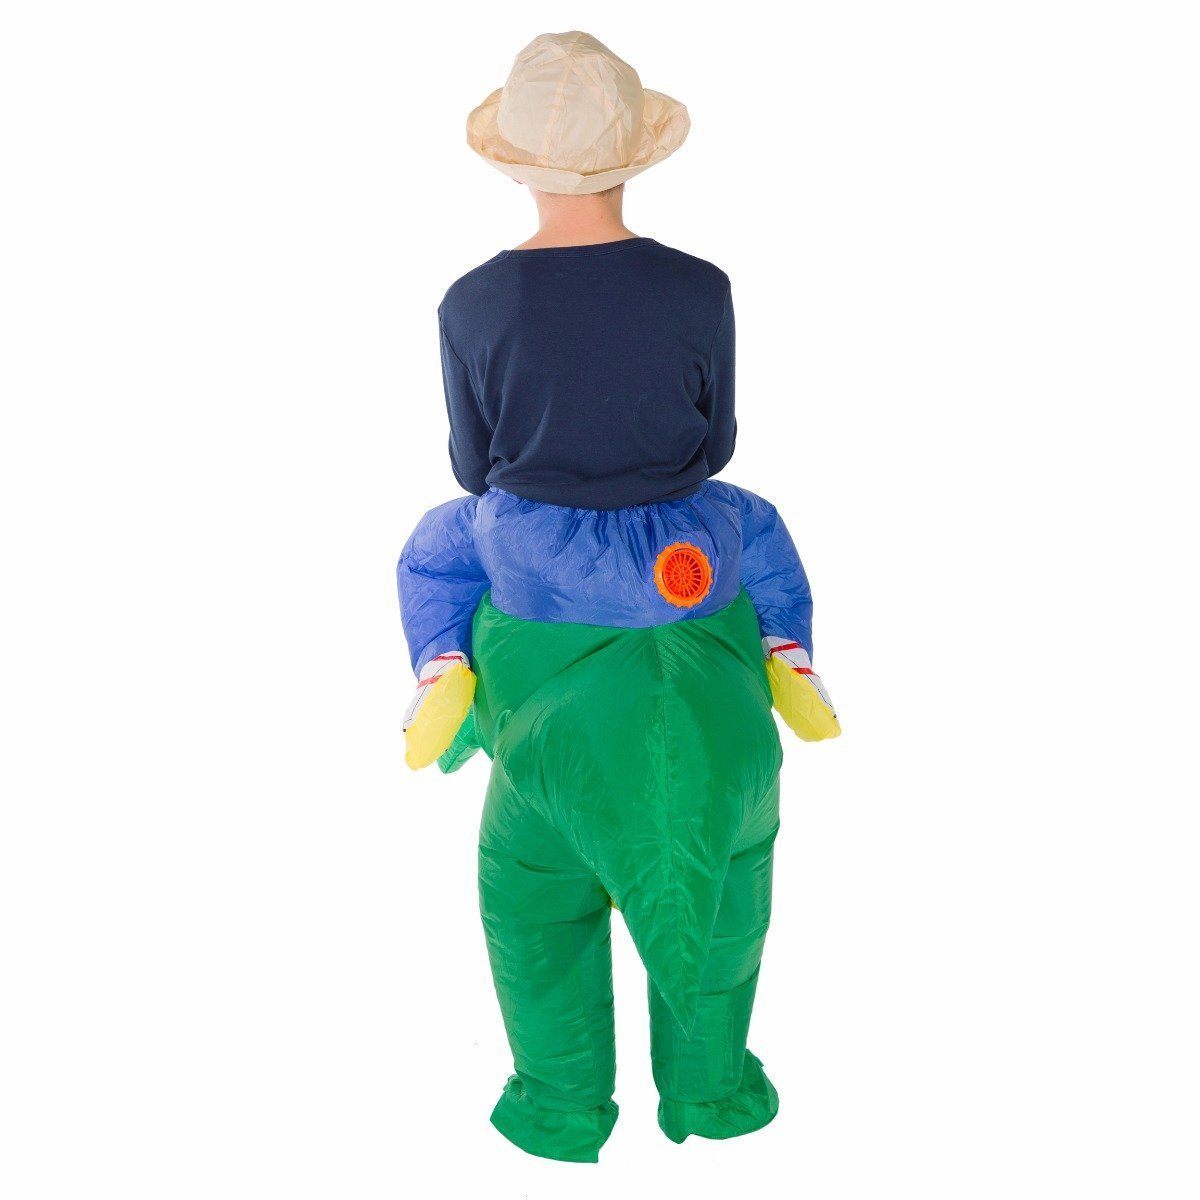 Fancy Dress - Kids Inflatable Dinosaur Costume